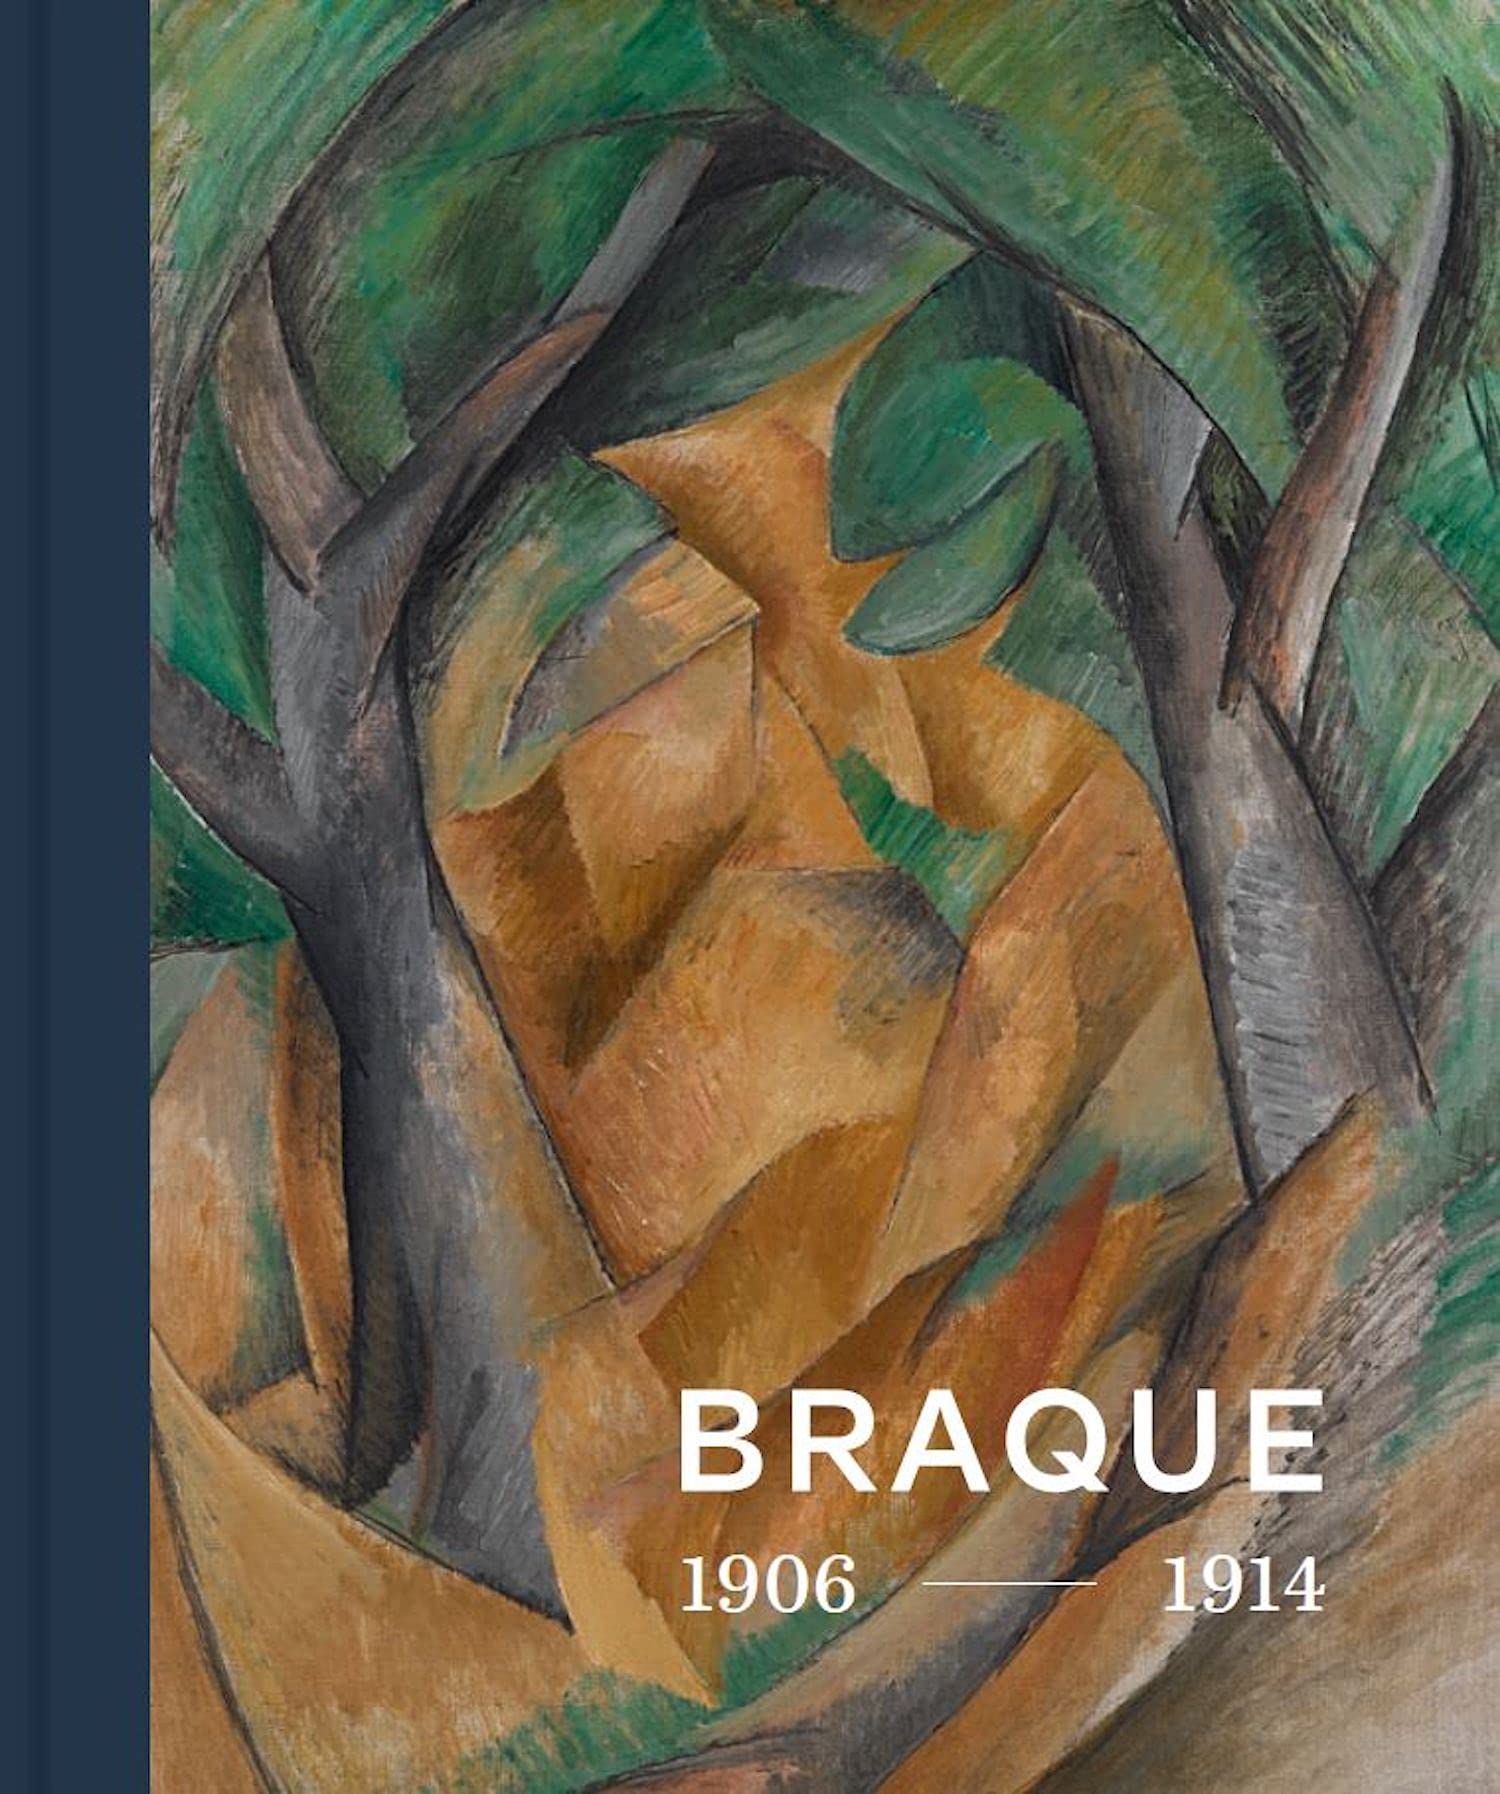 Georges Braque: Inventor of Cubism